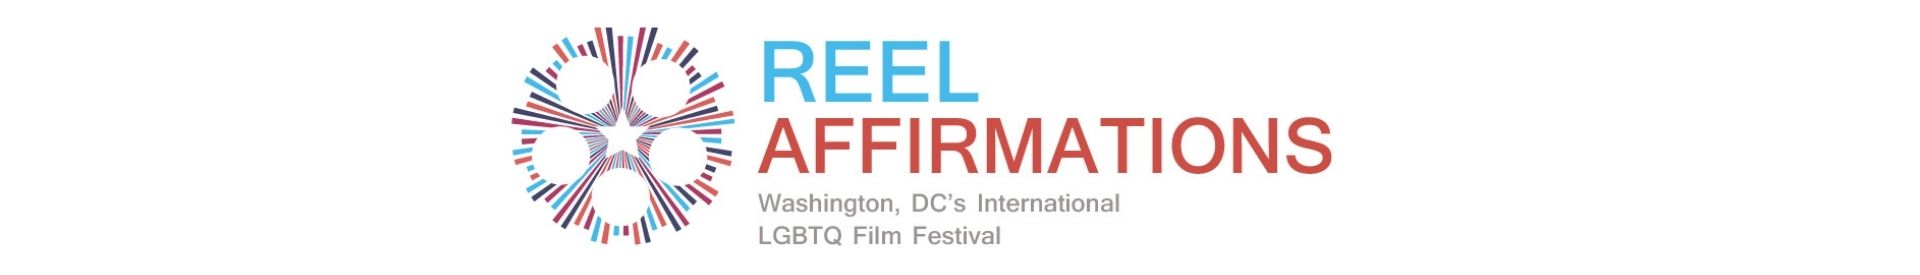 Reel Affirmations: Washington DC's international PRIDE Film Festival